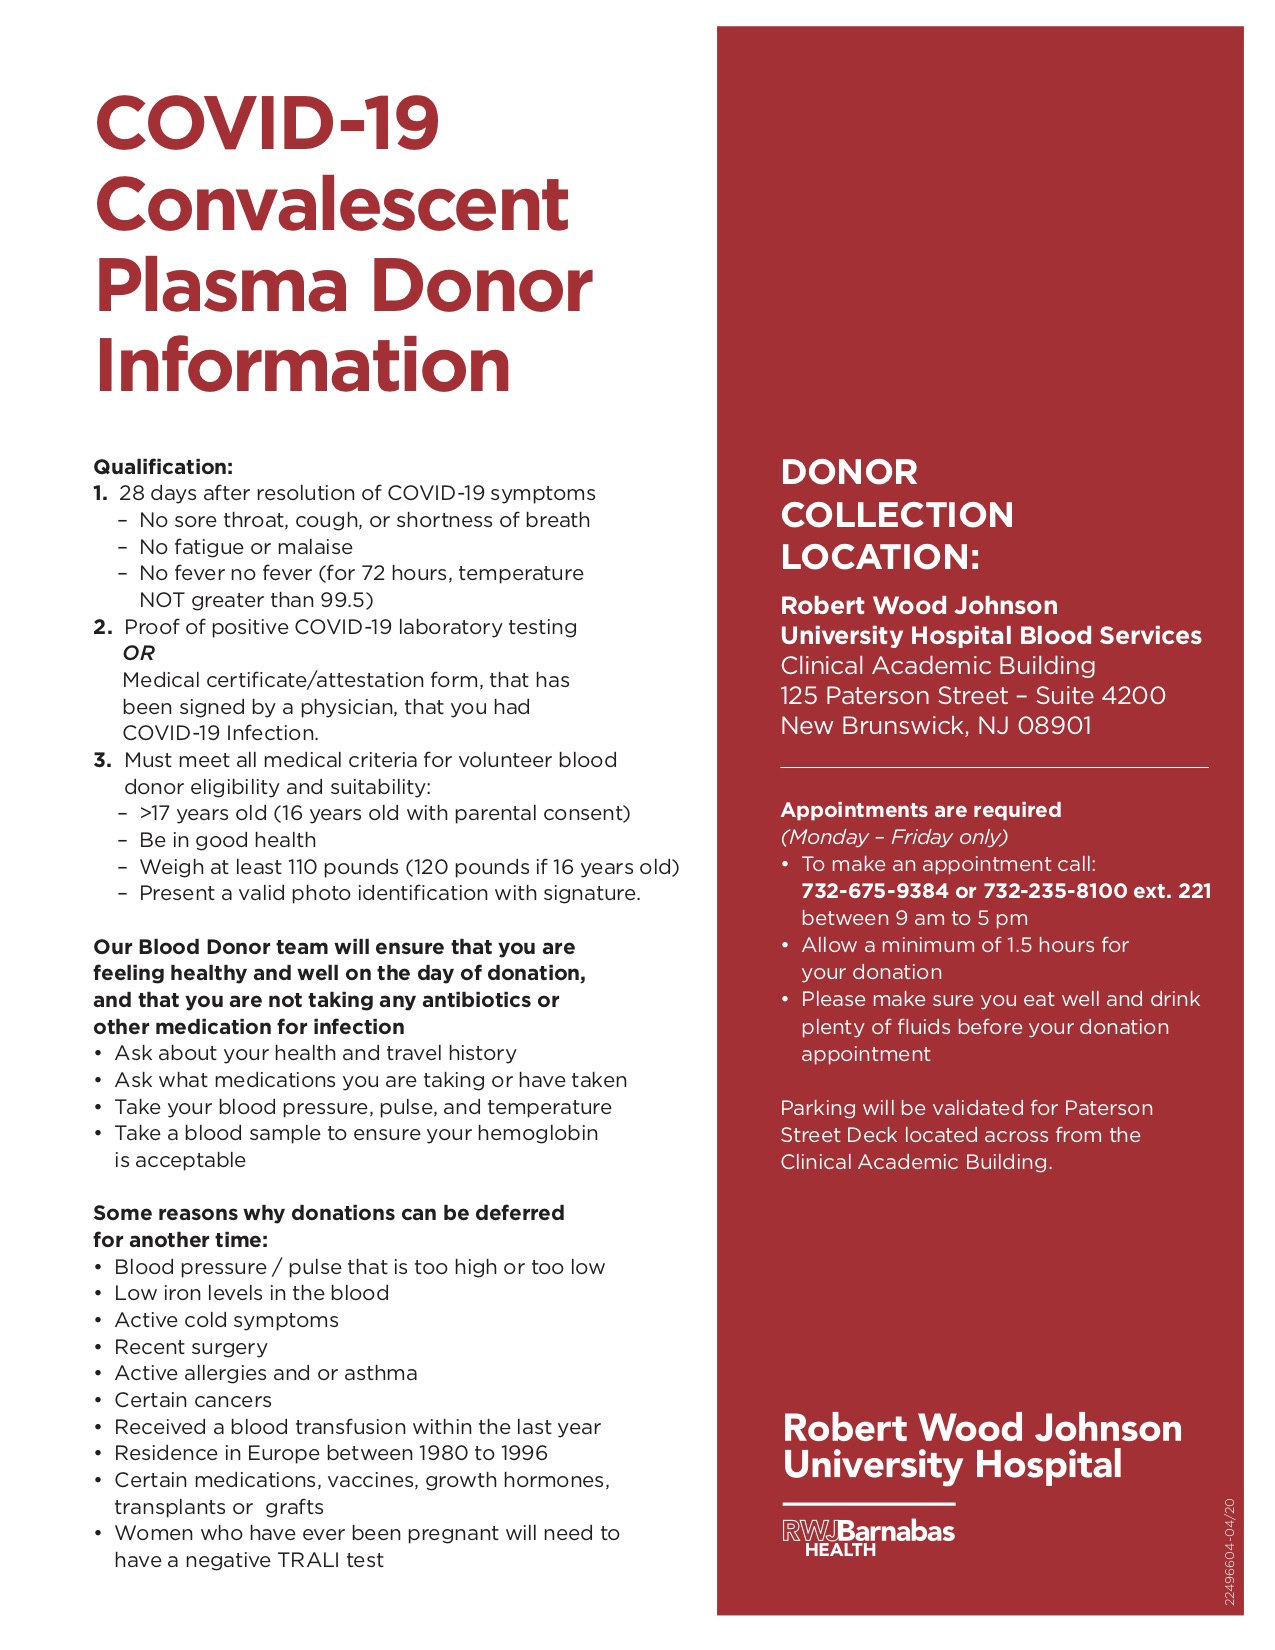 plasmadonationrwj